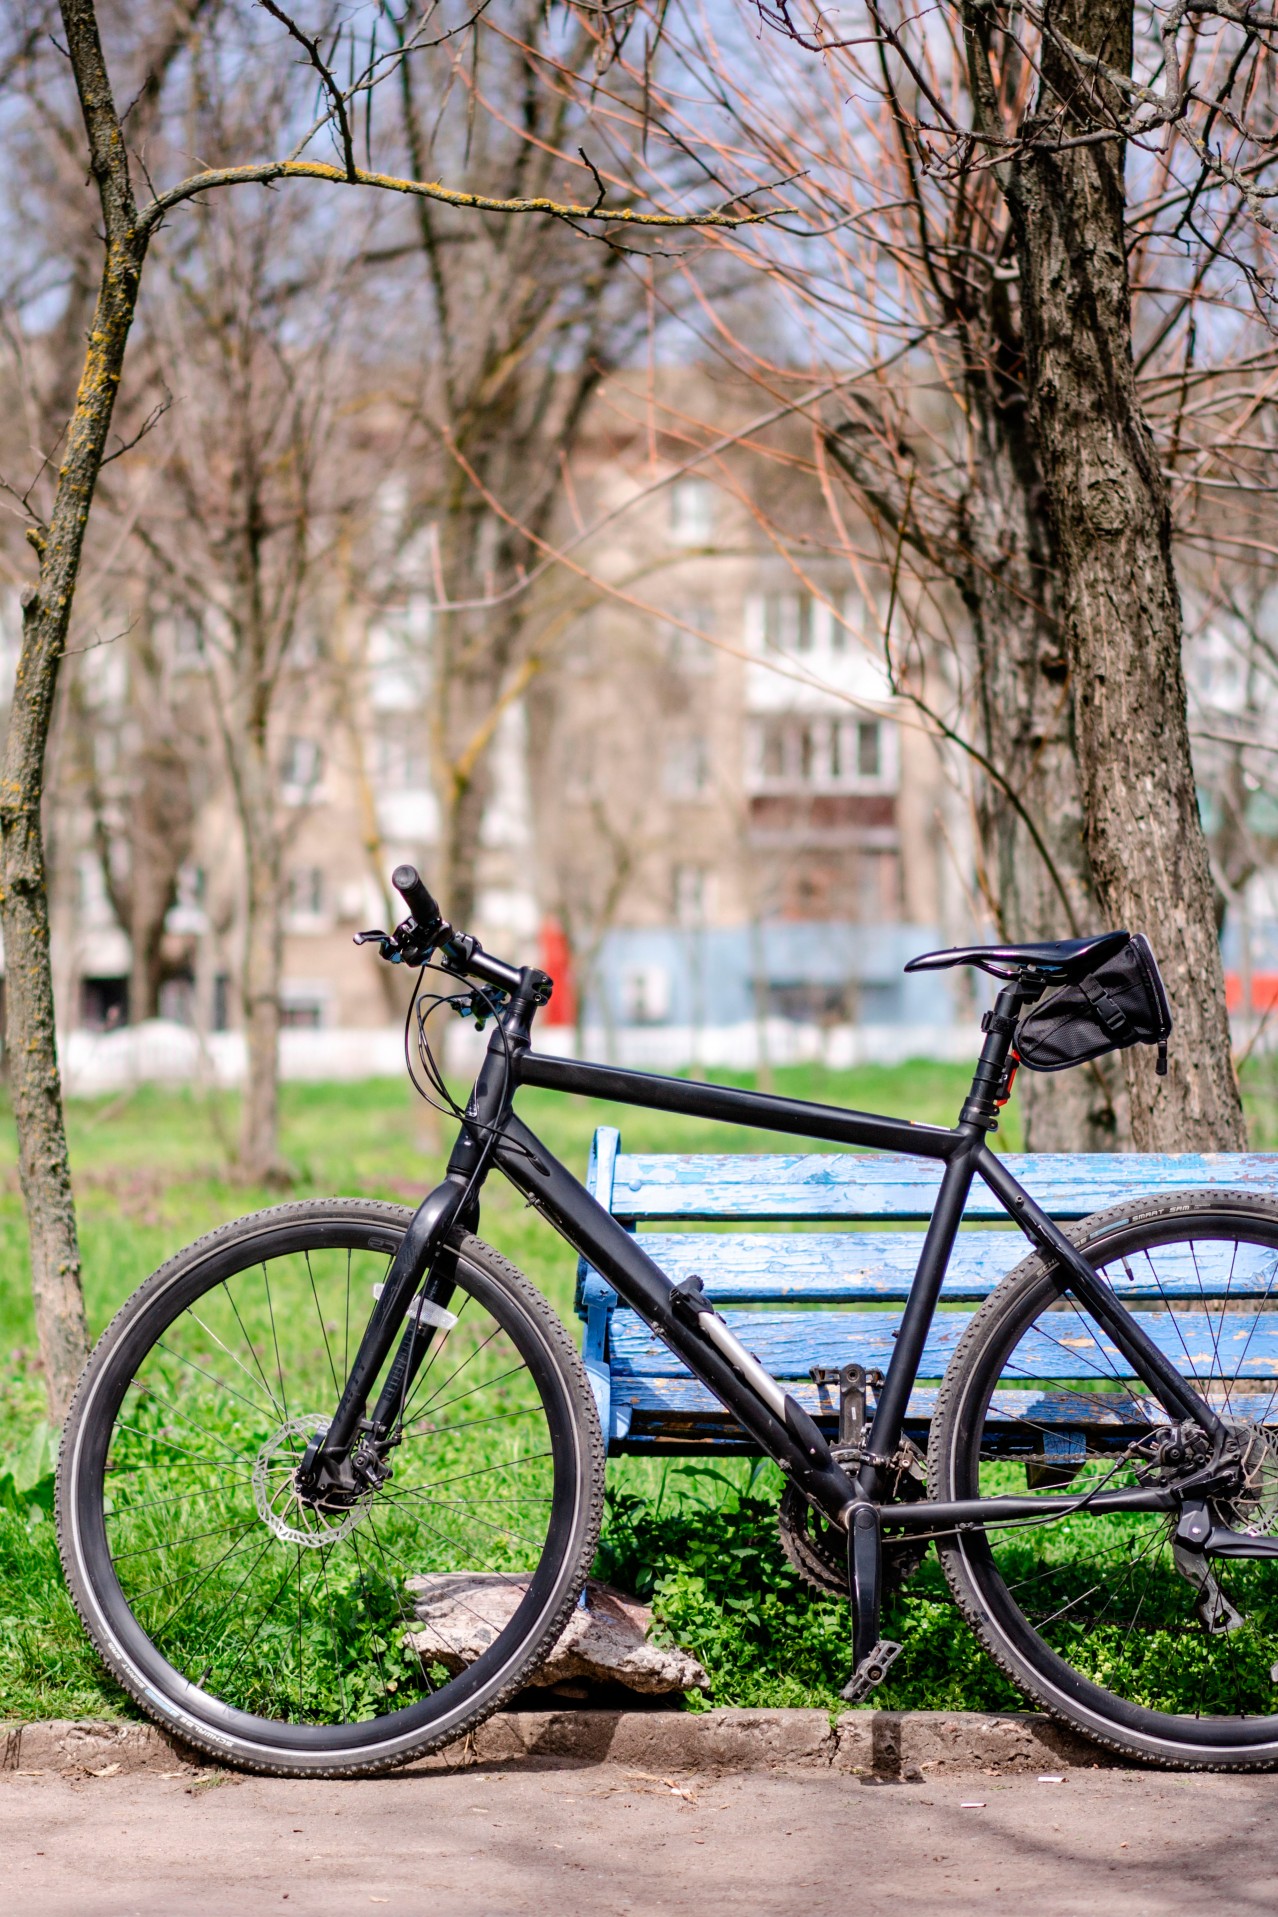 Bike near the wooden bench in park